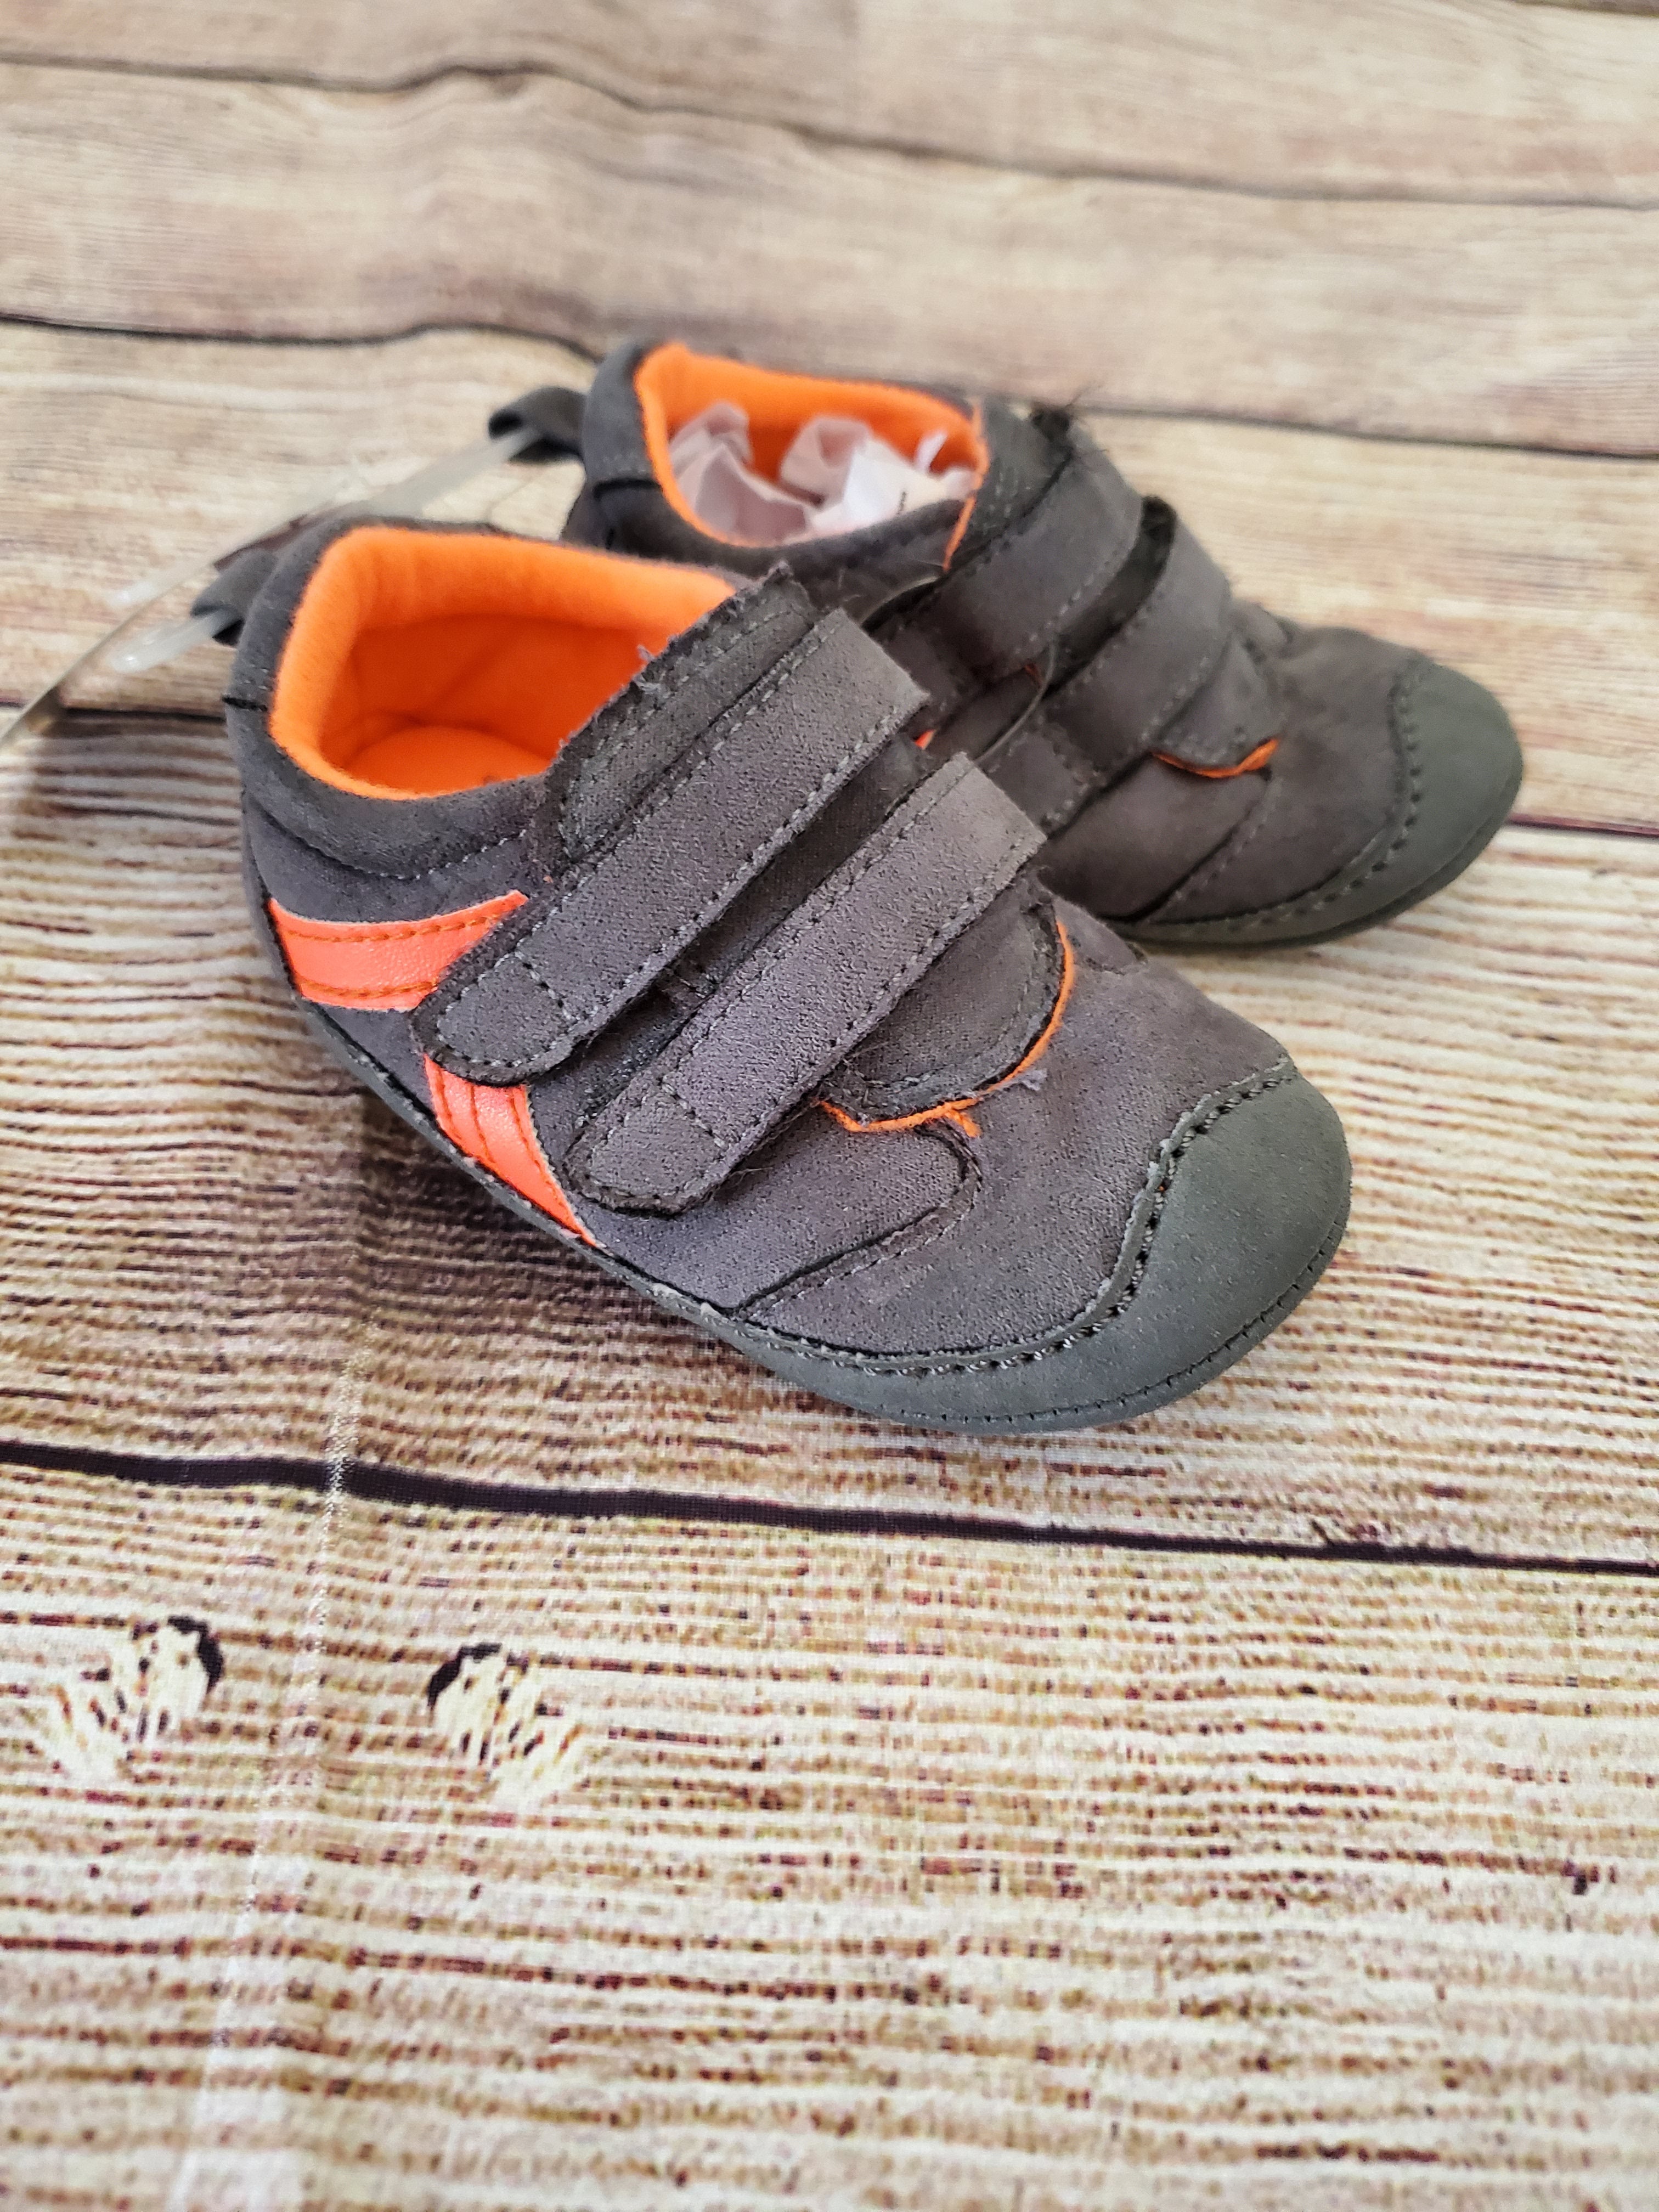 New Carters boys shoes sz6-9 months